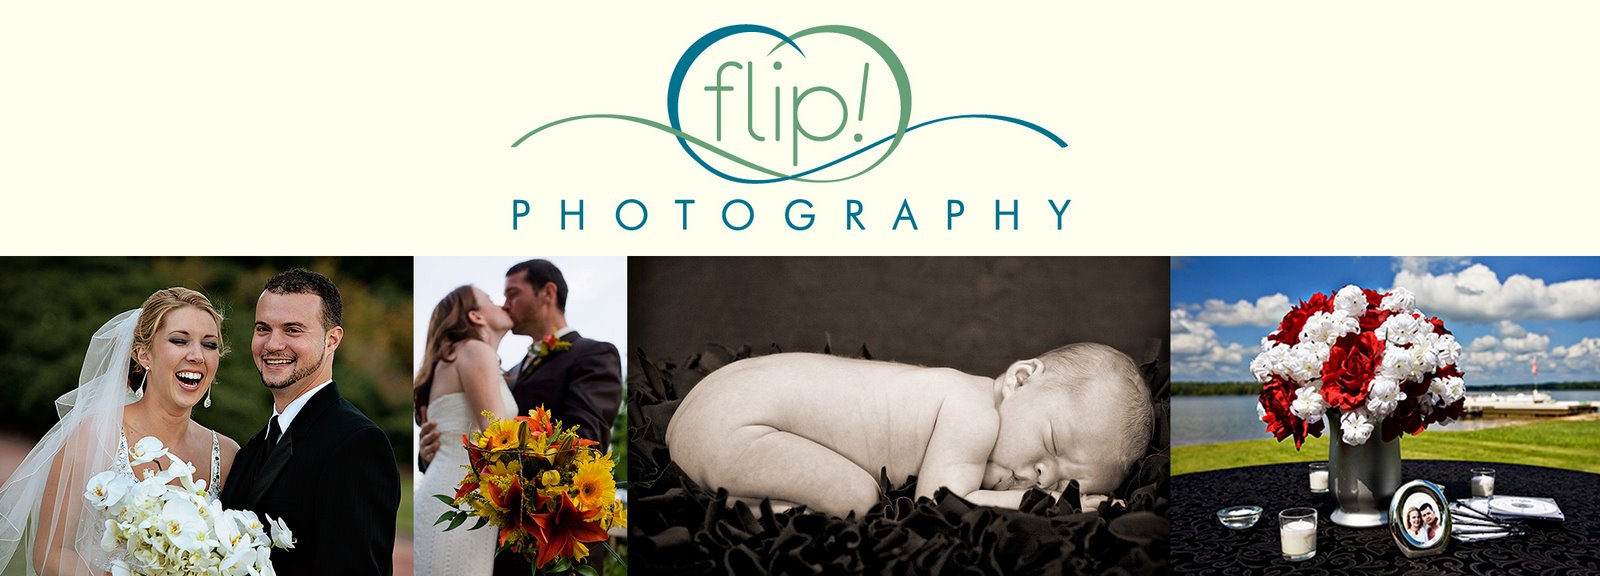 Flip! Photography Blog